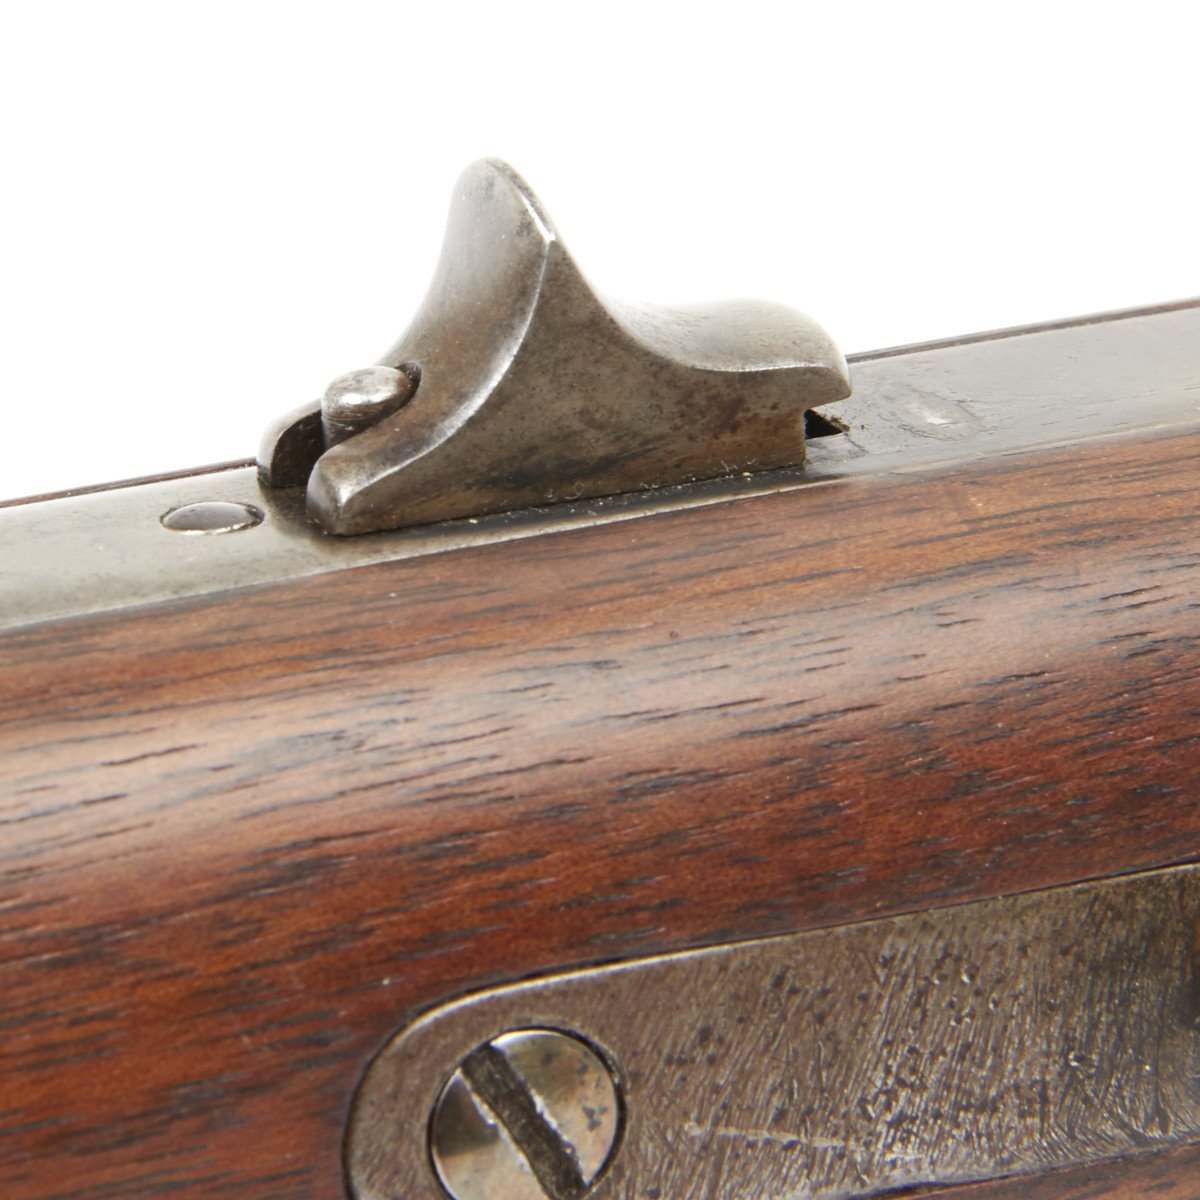 civil war sharps rifle serial numbers